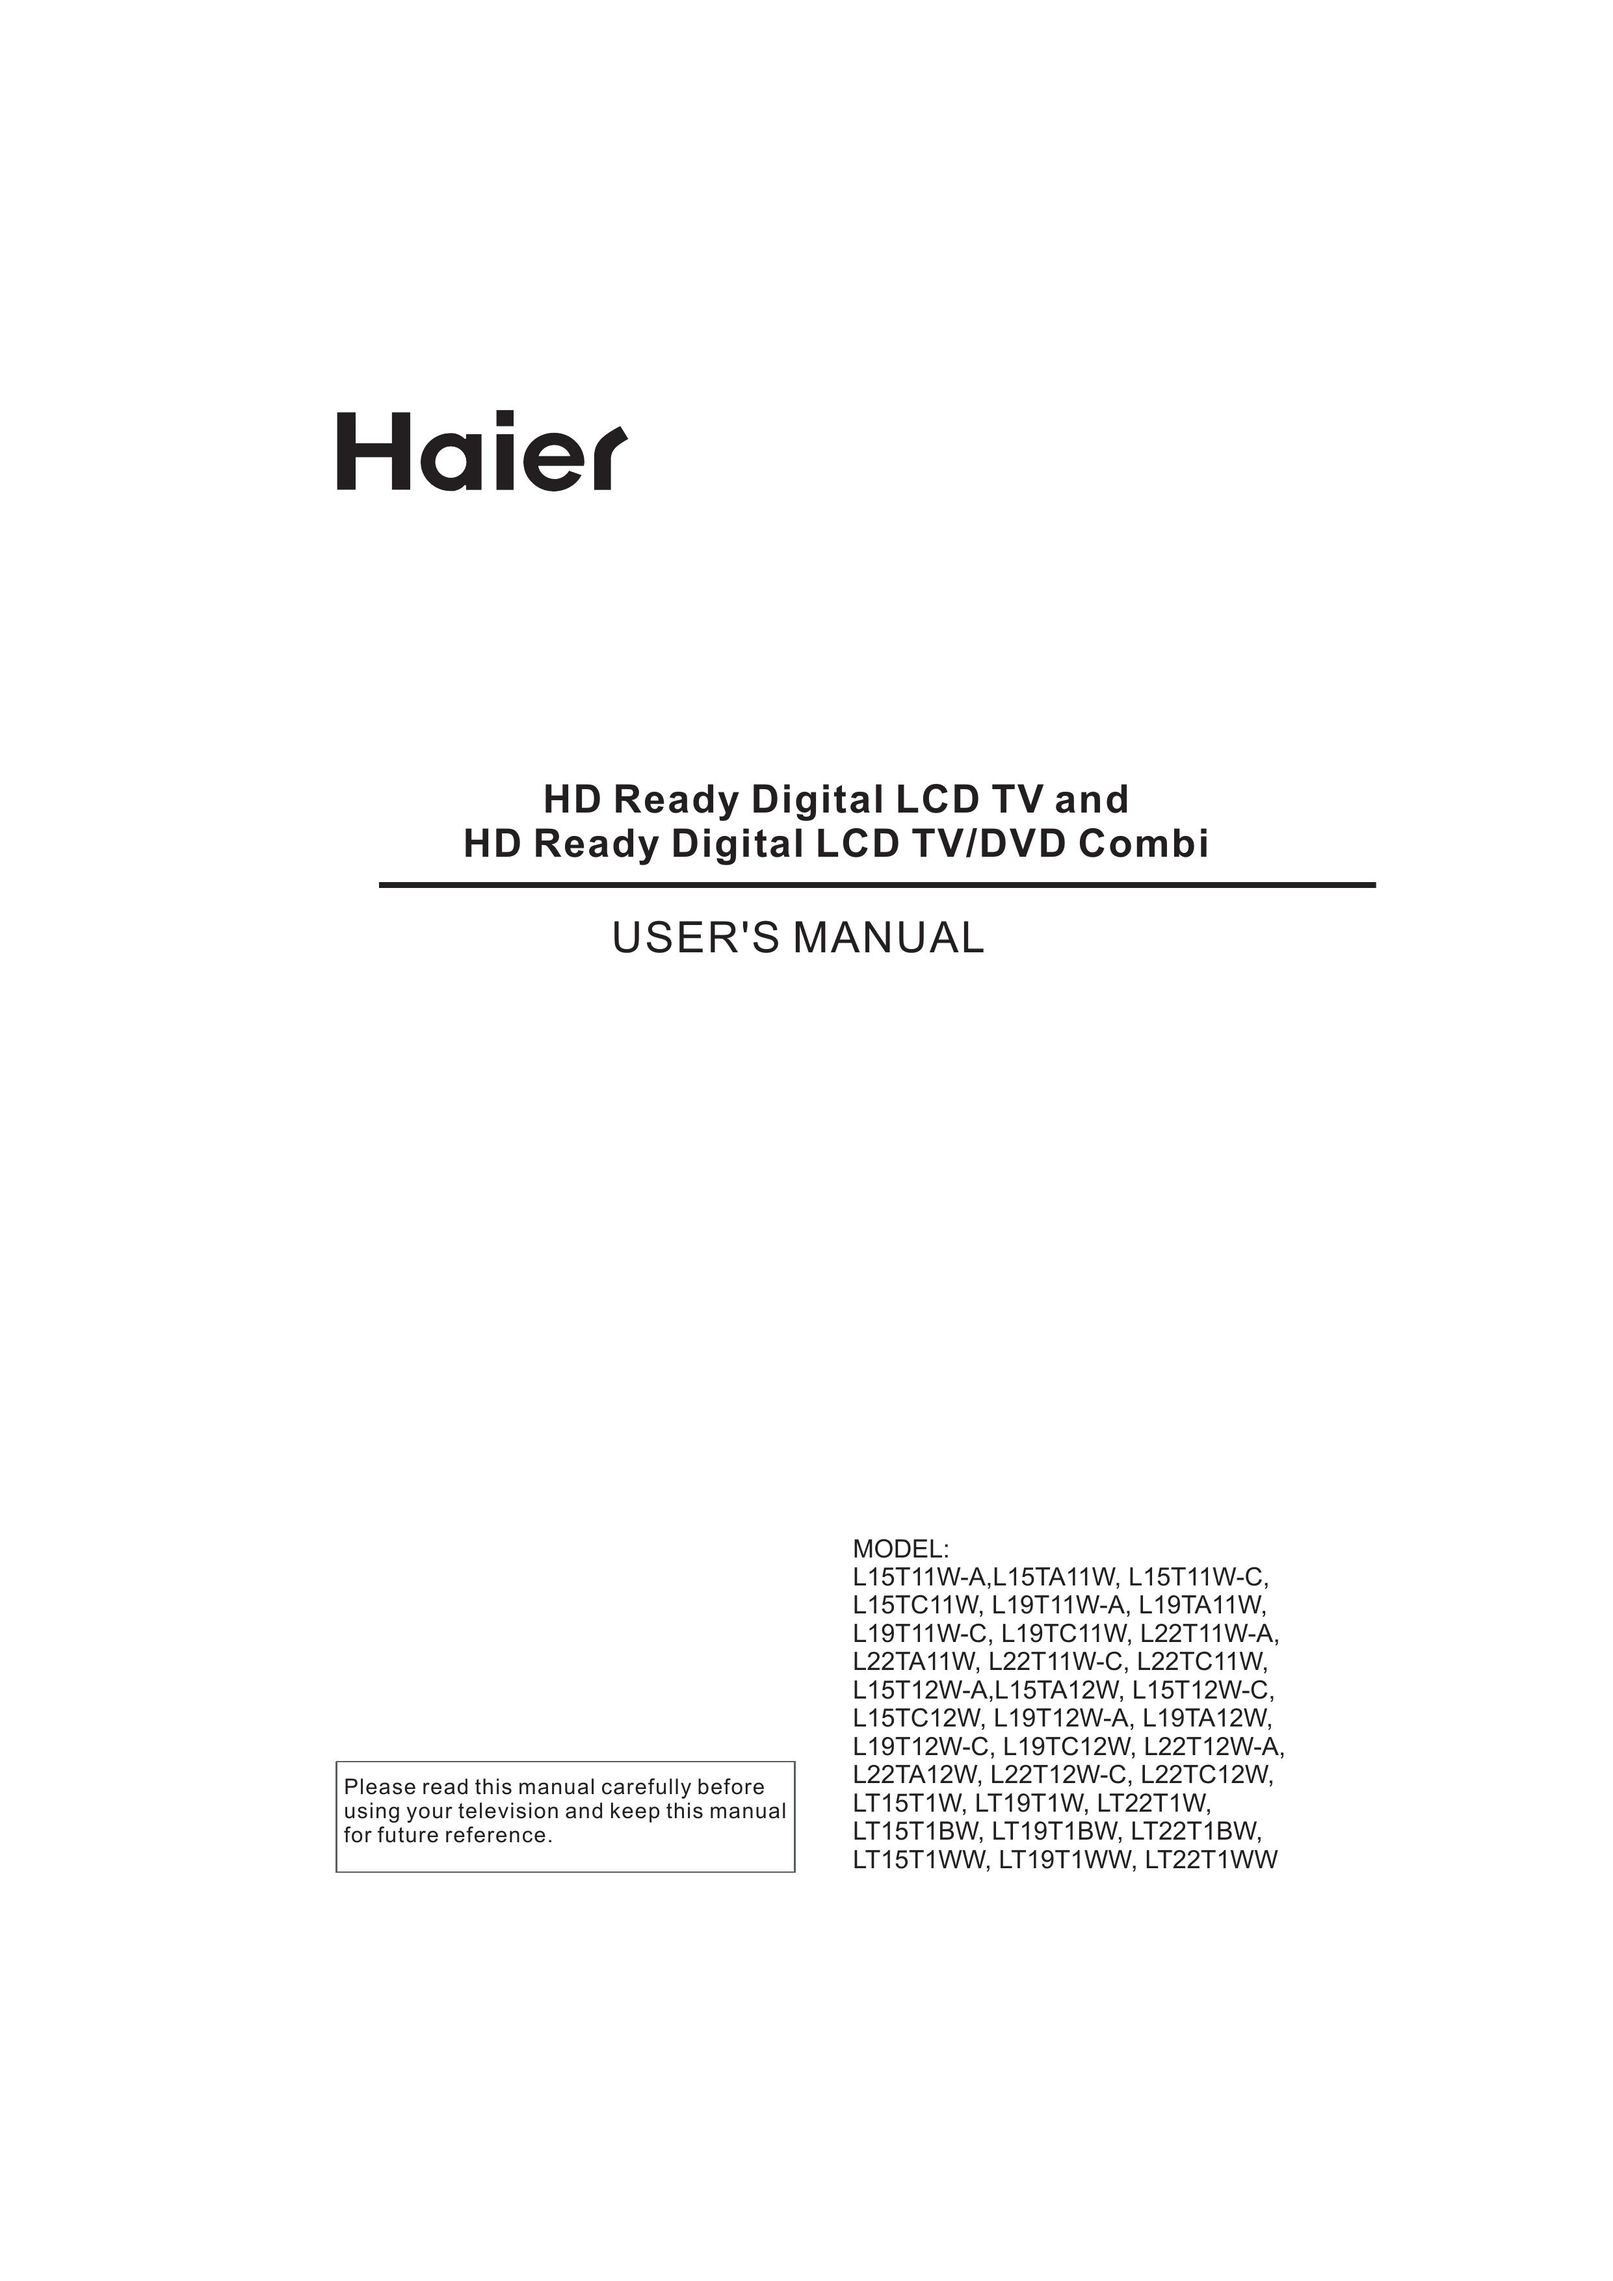 Haier L19T11W-C TV DVD Combo User Manual